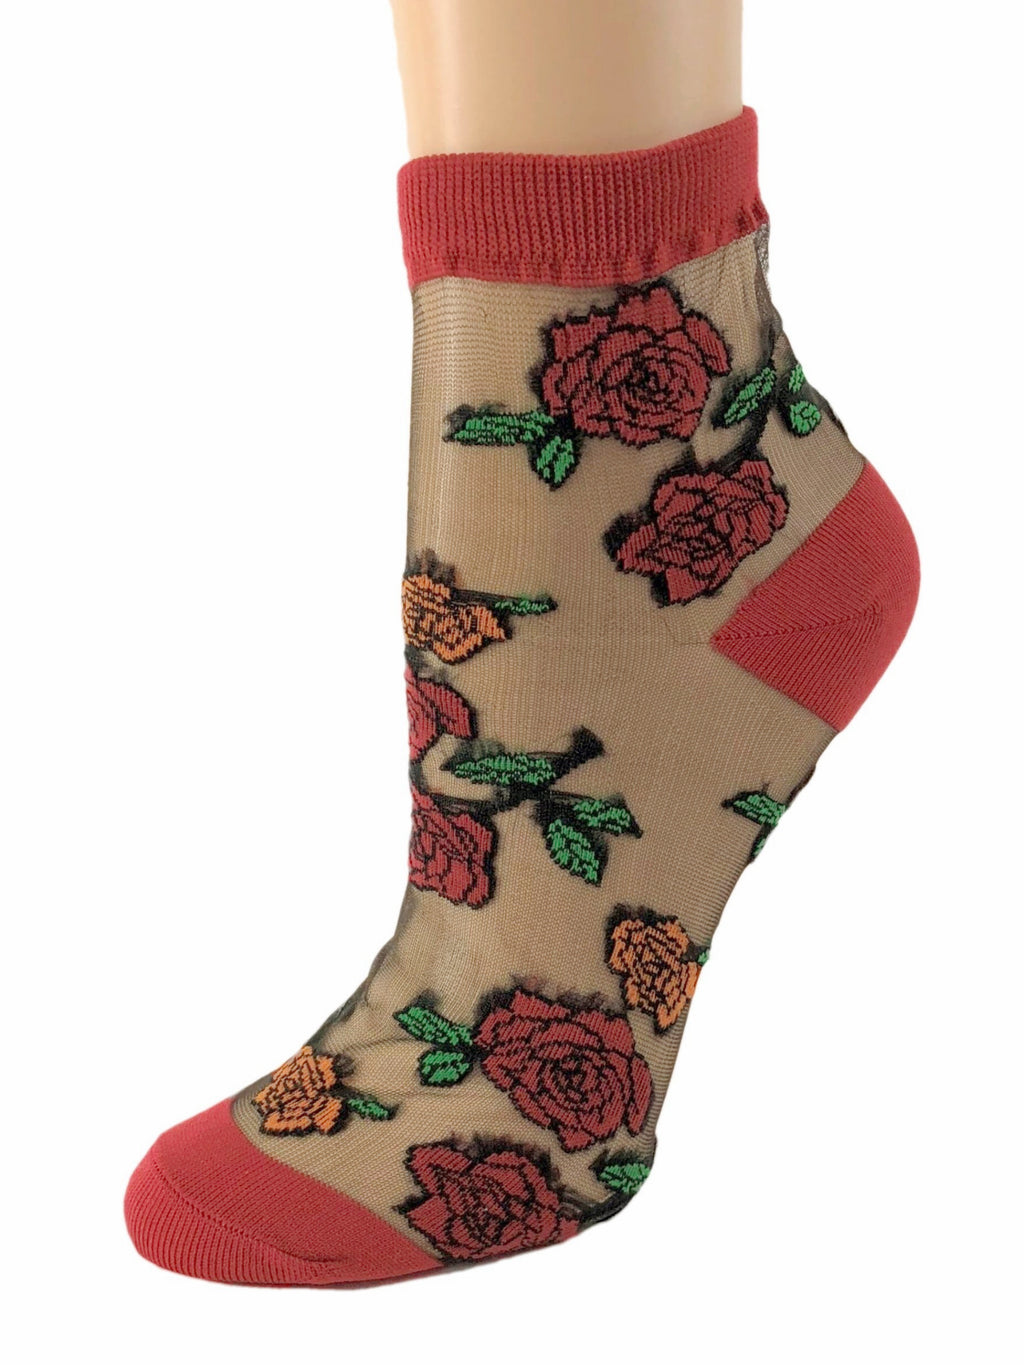 Sharp Red Roses Sheer Socks - Global Trendz Fashion®